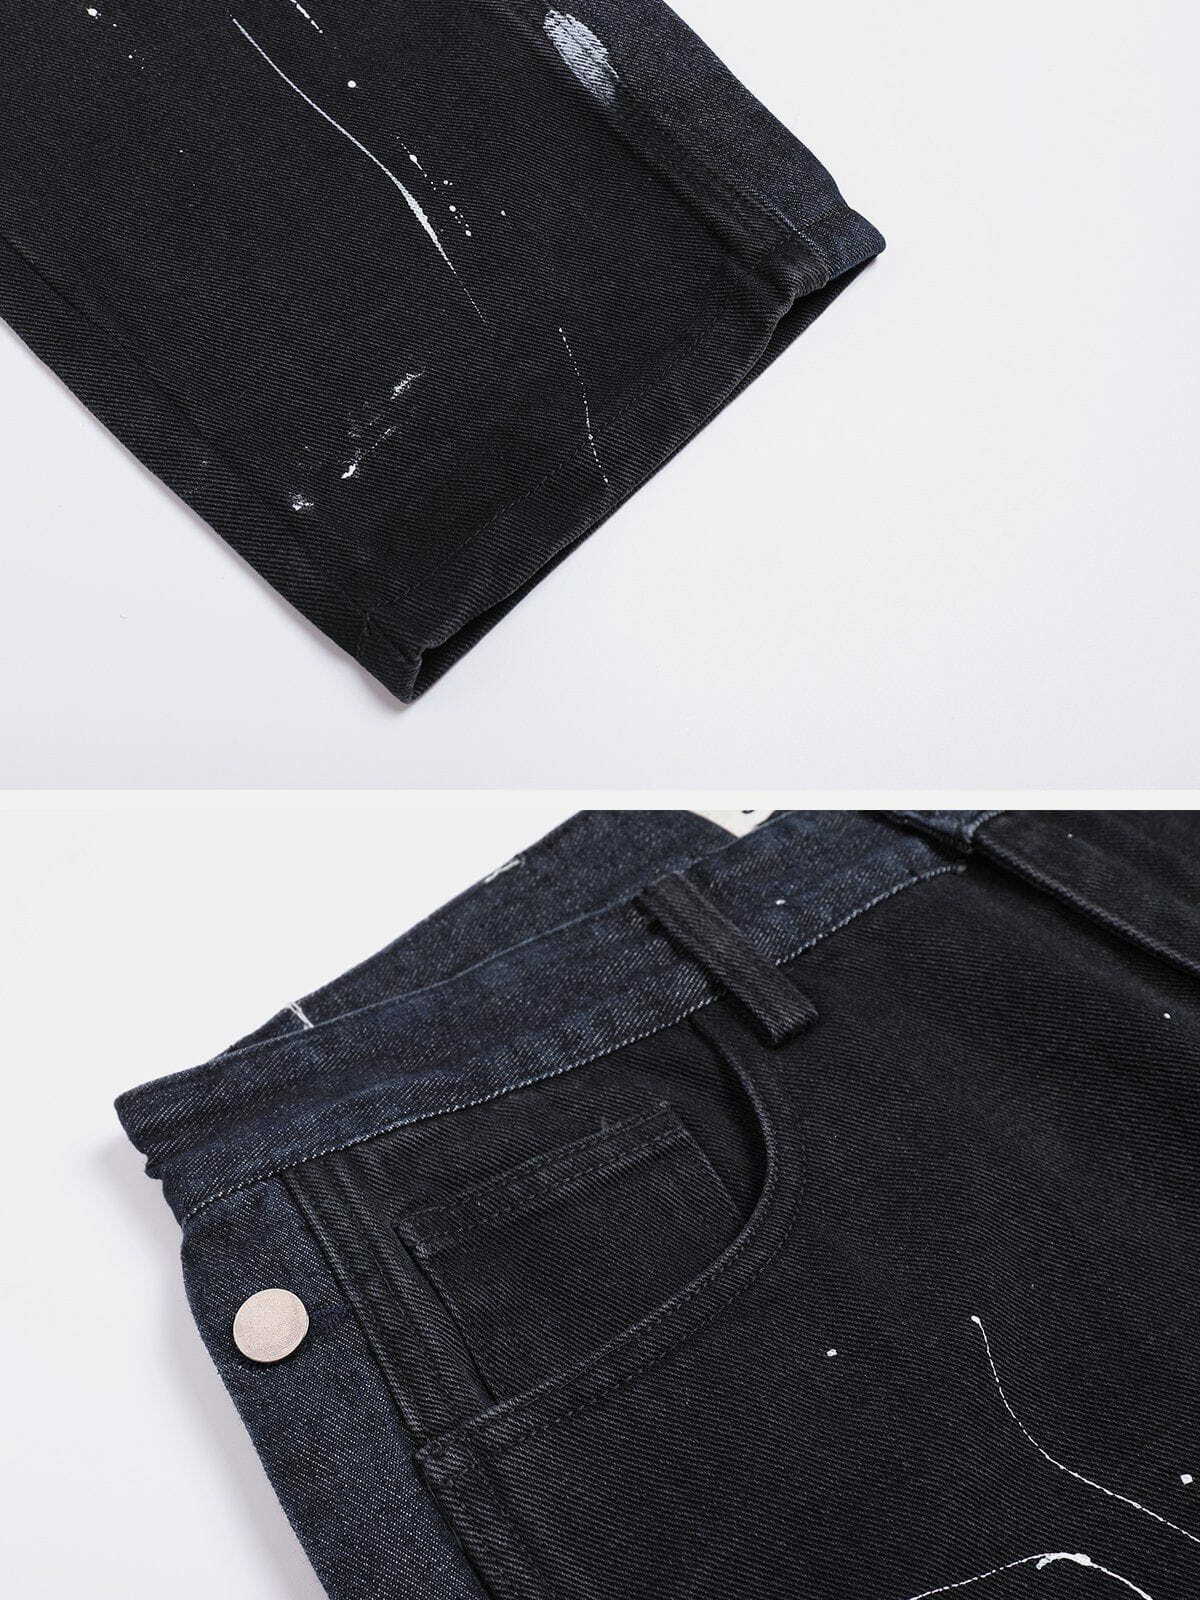 retro splash ink jeans edgy & vibrant streetwear 5255